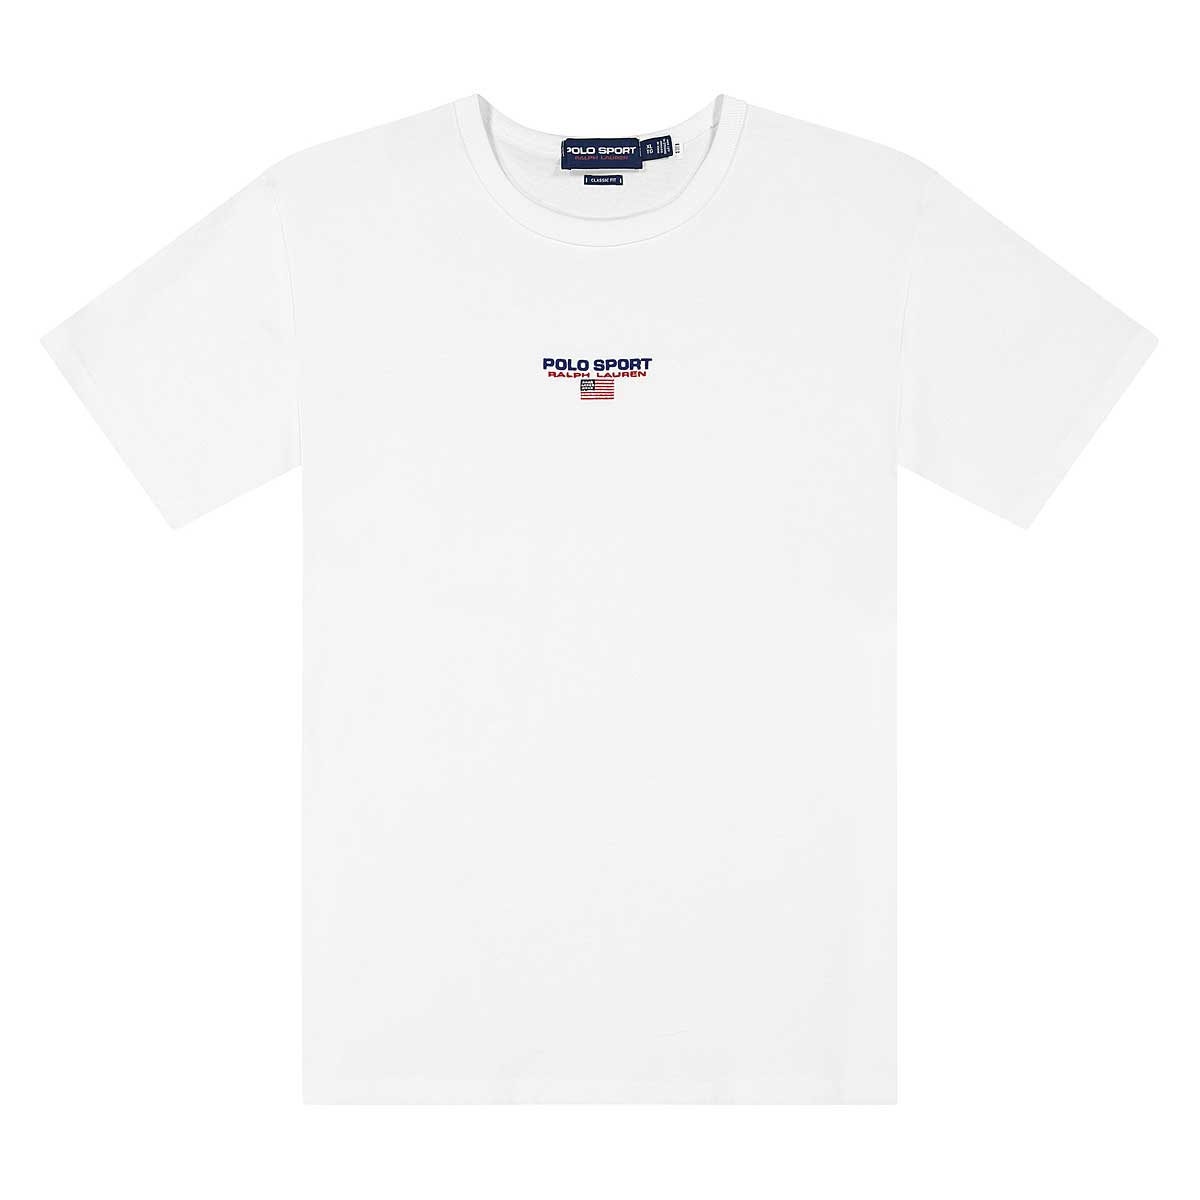 Polo Ralph Lauren Small Script Polo Sport T-Shirt, White